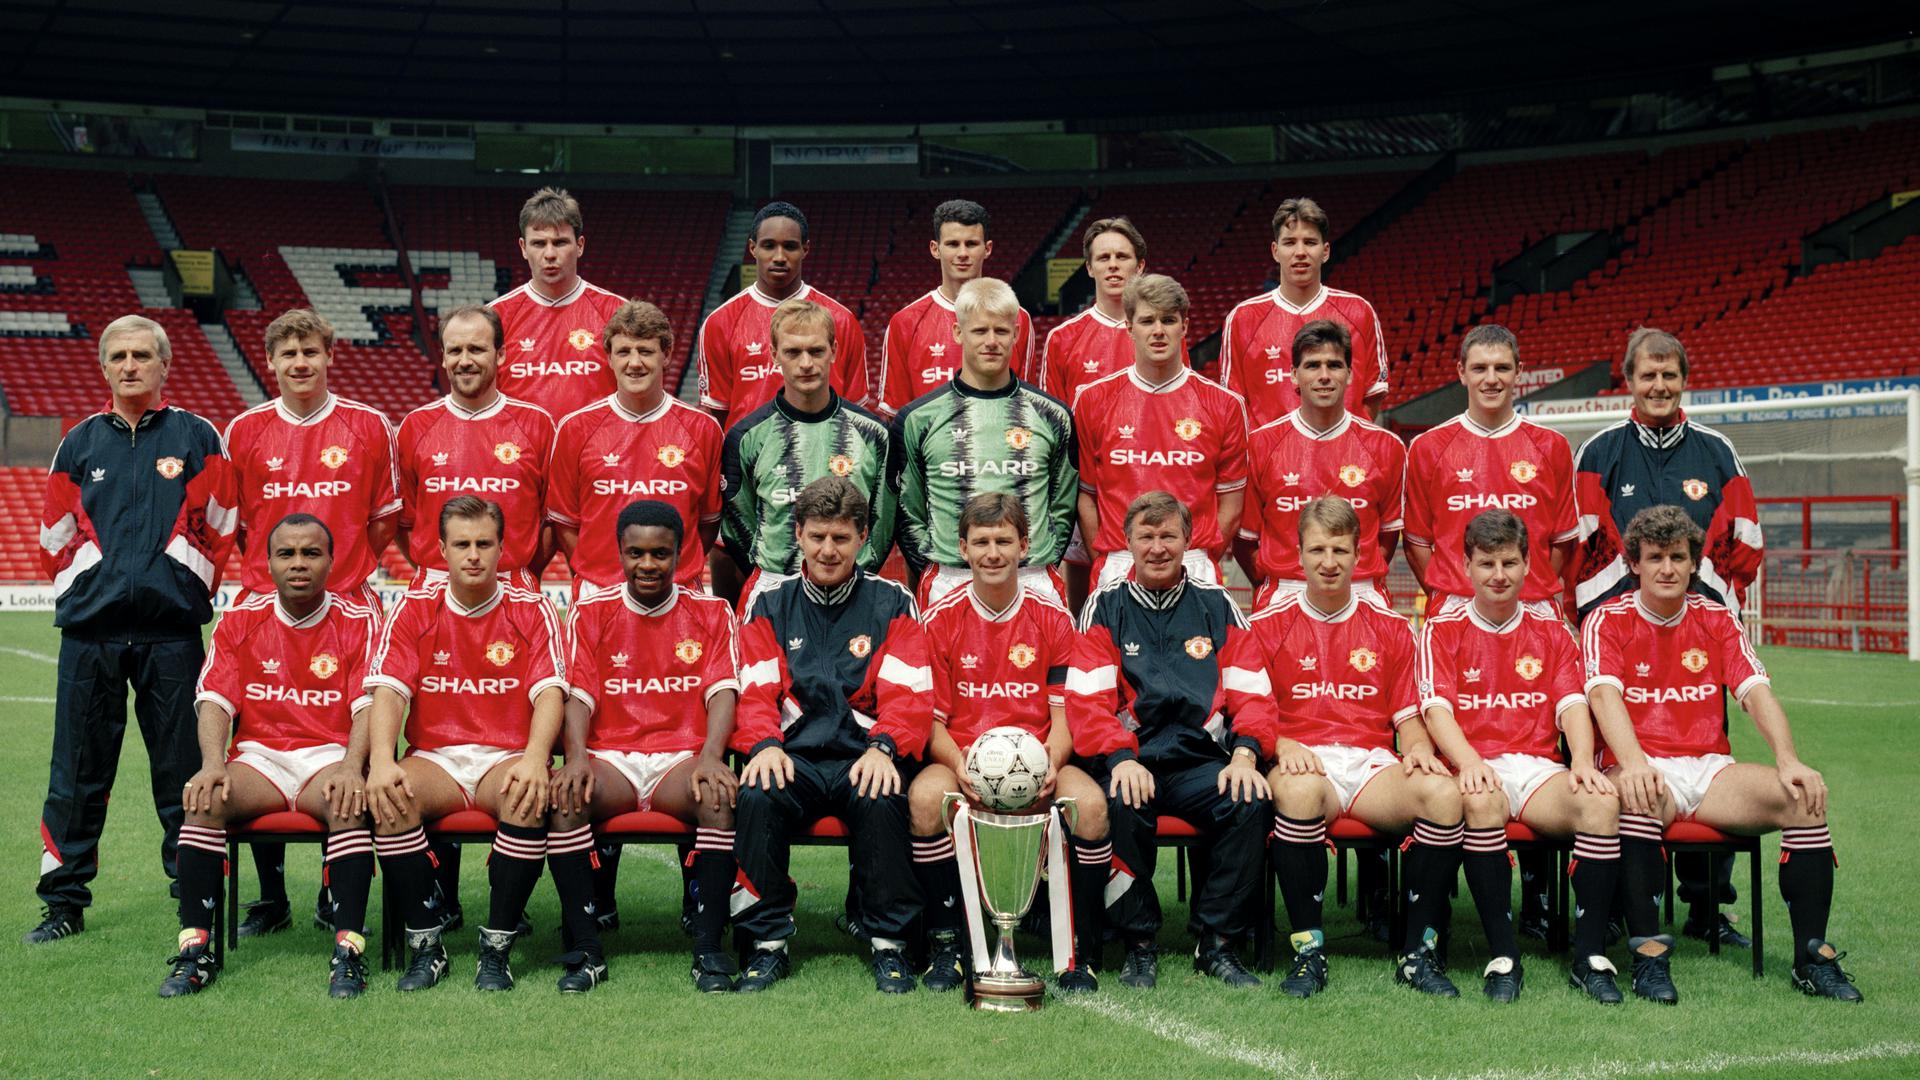 Classic squad photos from Man Utd's history